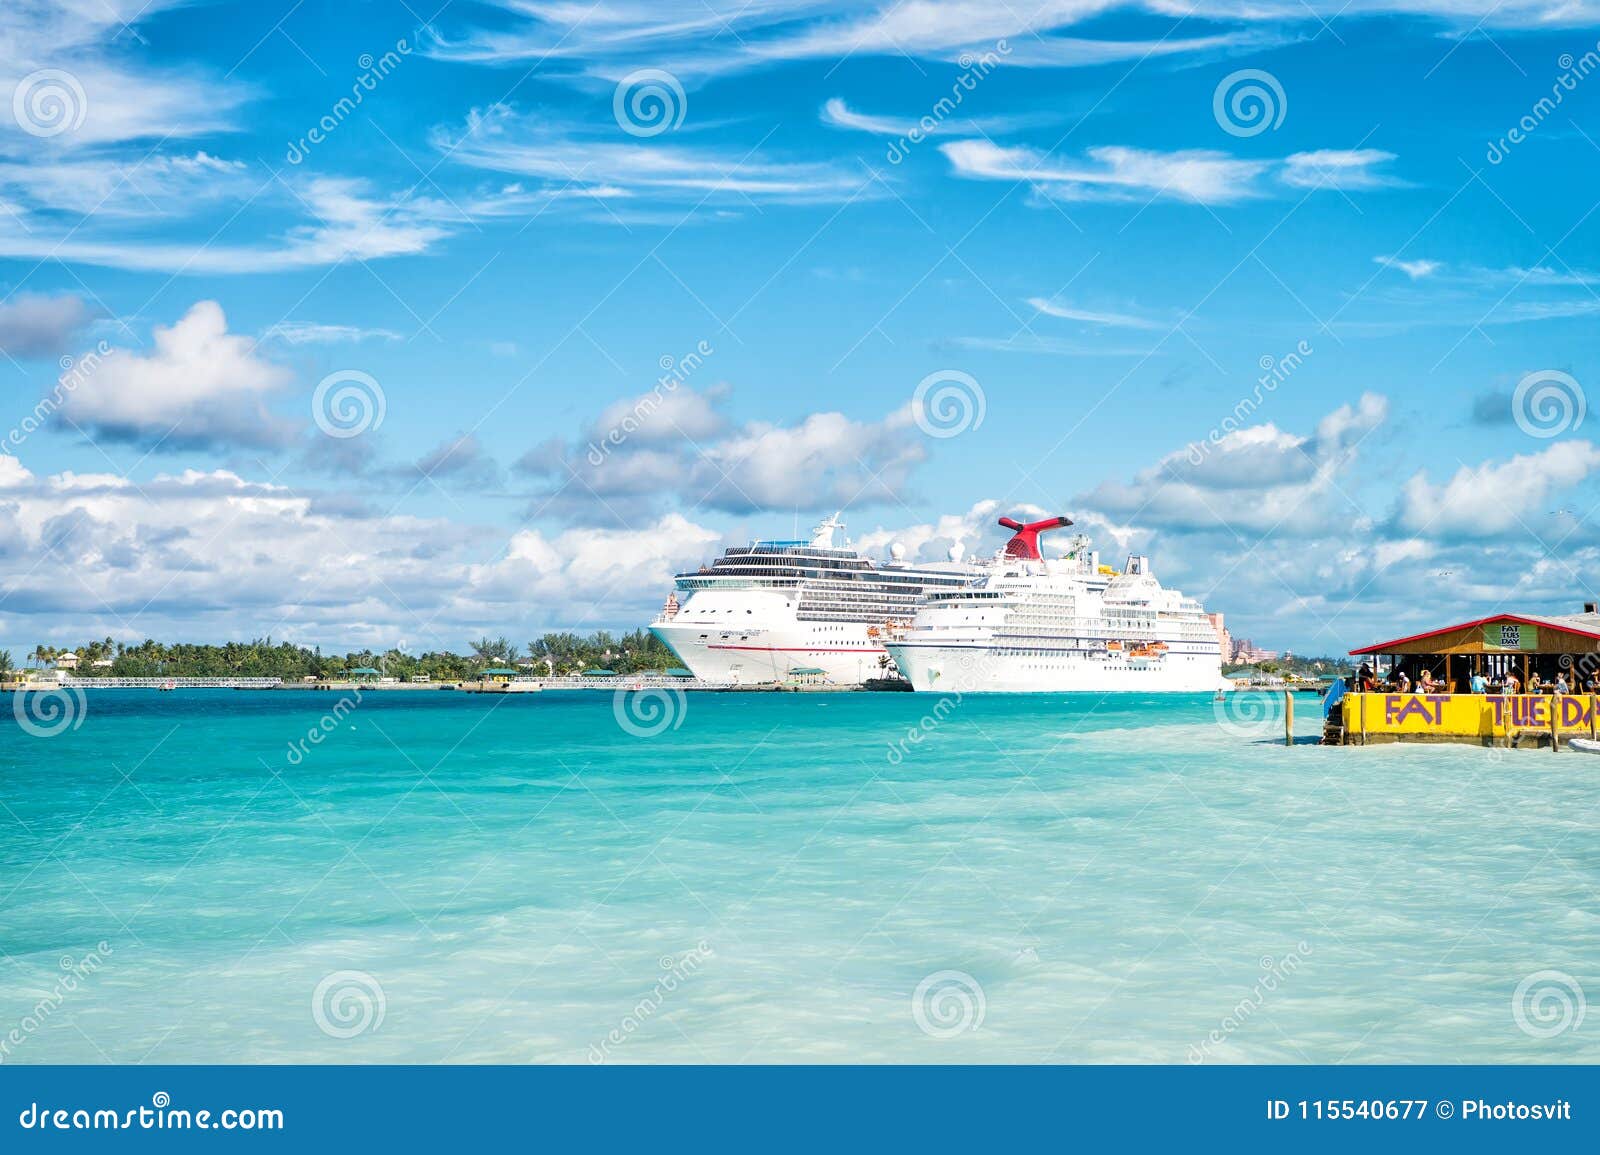 Nassau, Bahamas - January 07, 2016: Cruise Ships In Port. Ocean Liners